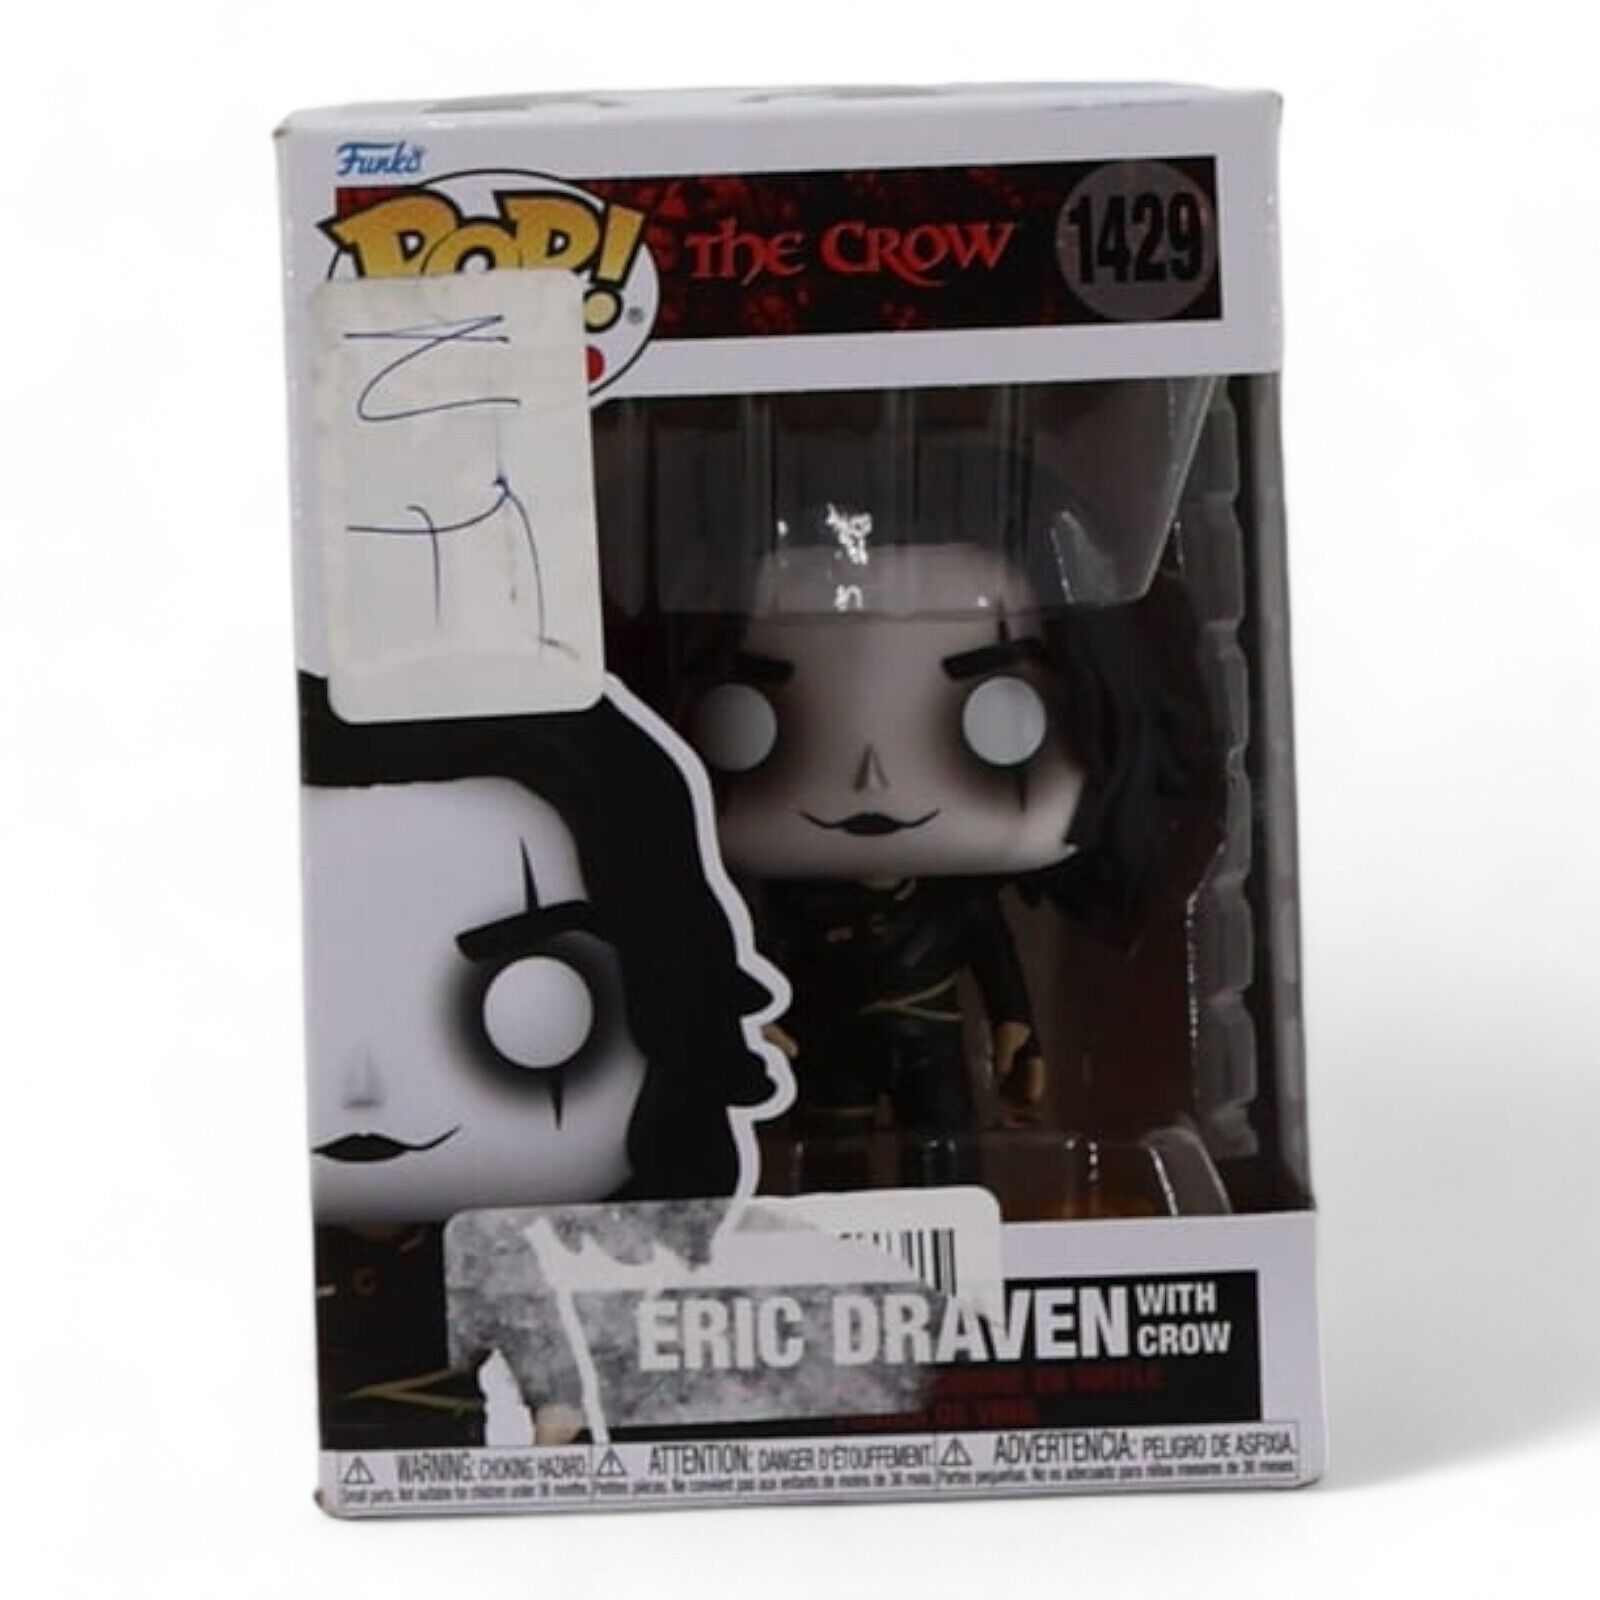 Funko Pop Movies The Crow #1429 Eric Draven with Crow Vinyl Figure